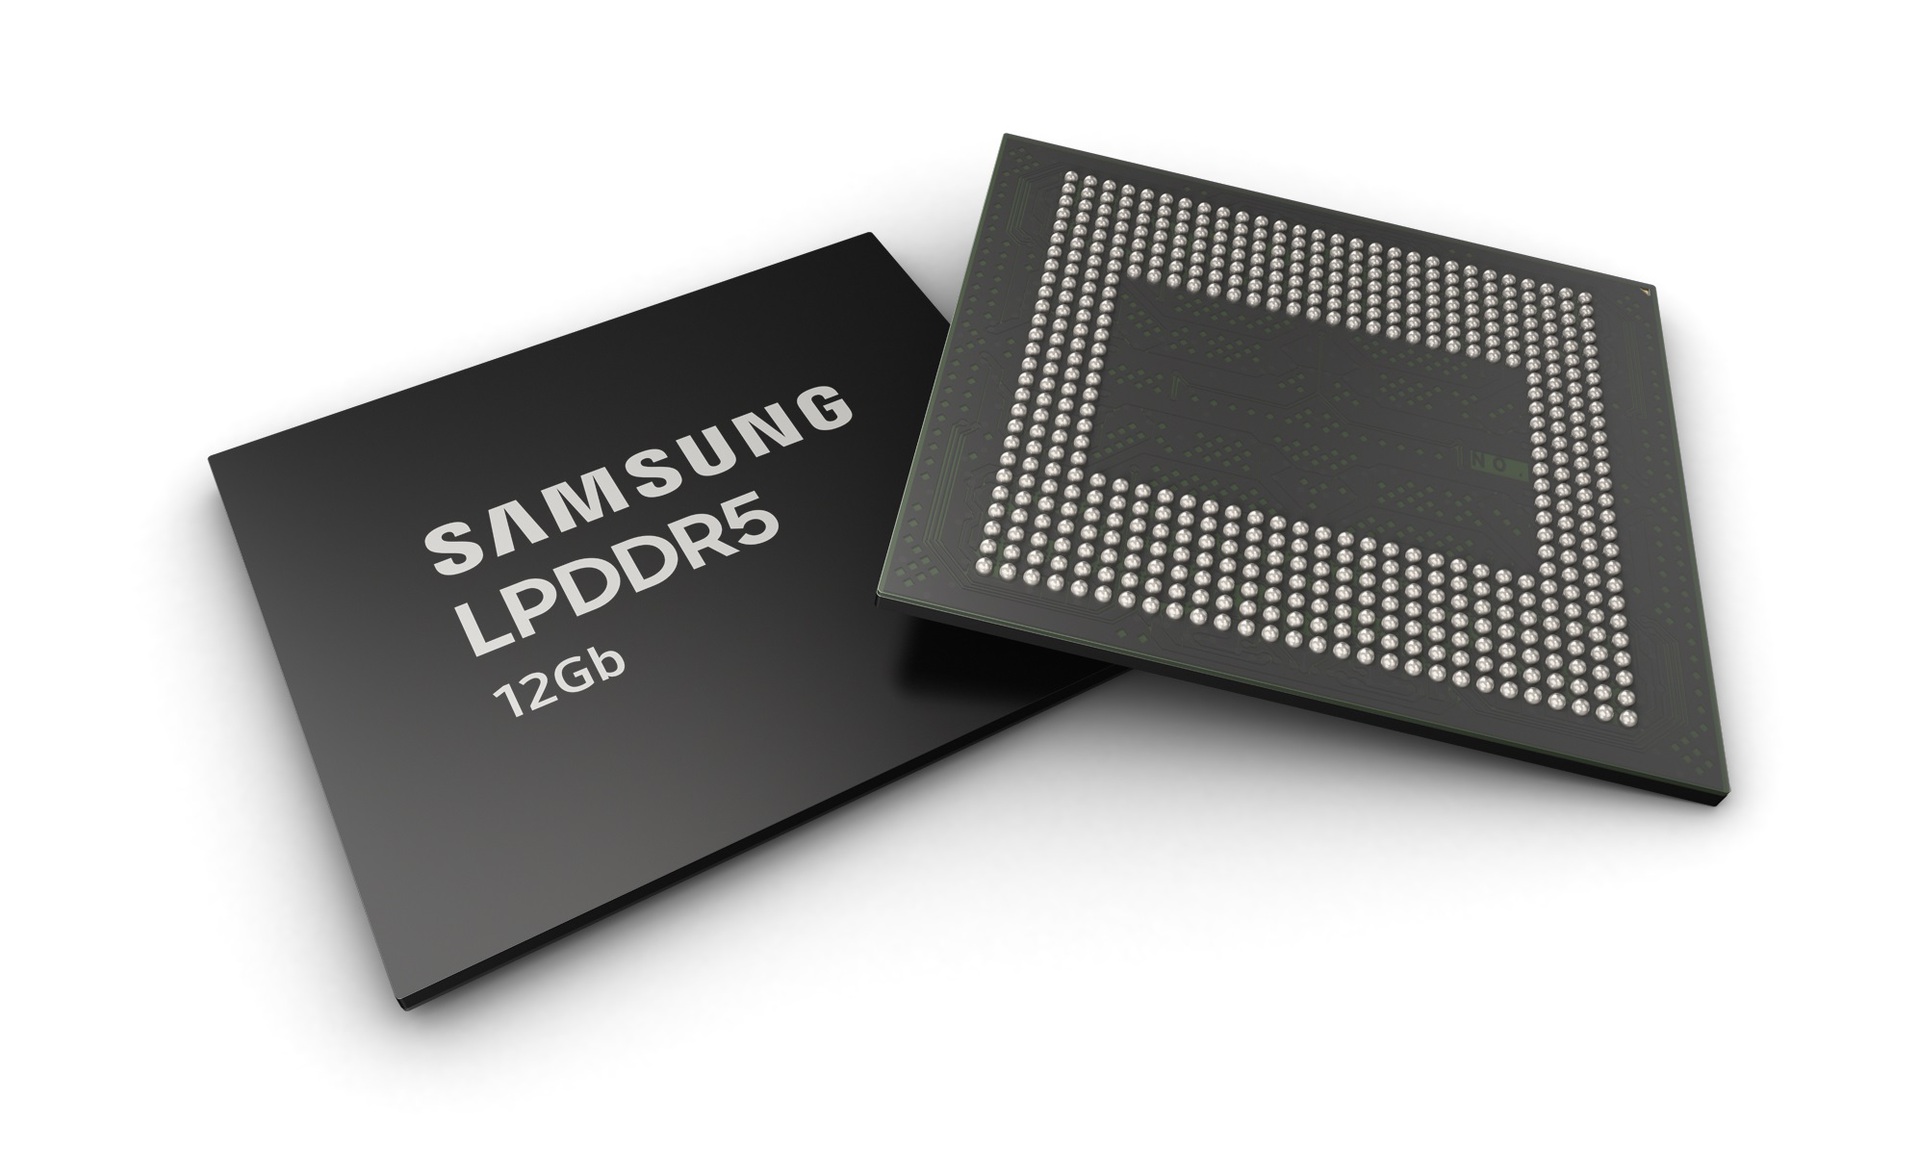 Samsung 12GB LPDDR5 RAM render image on a white background.